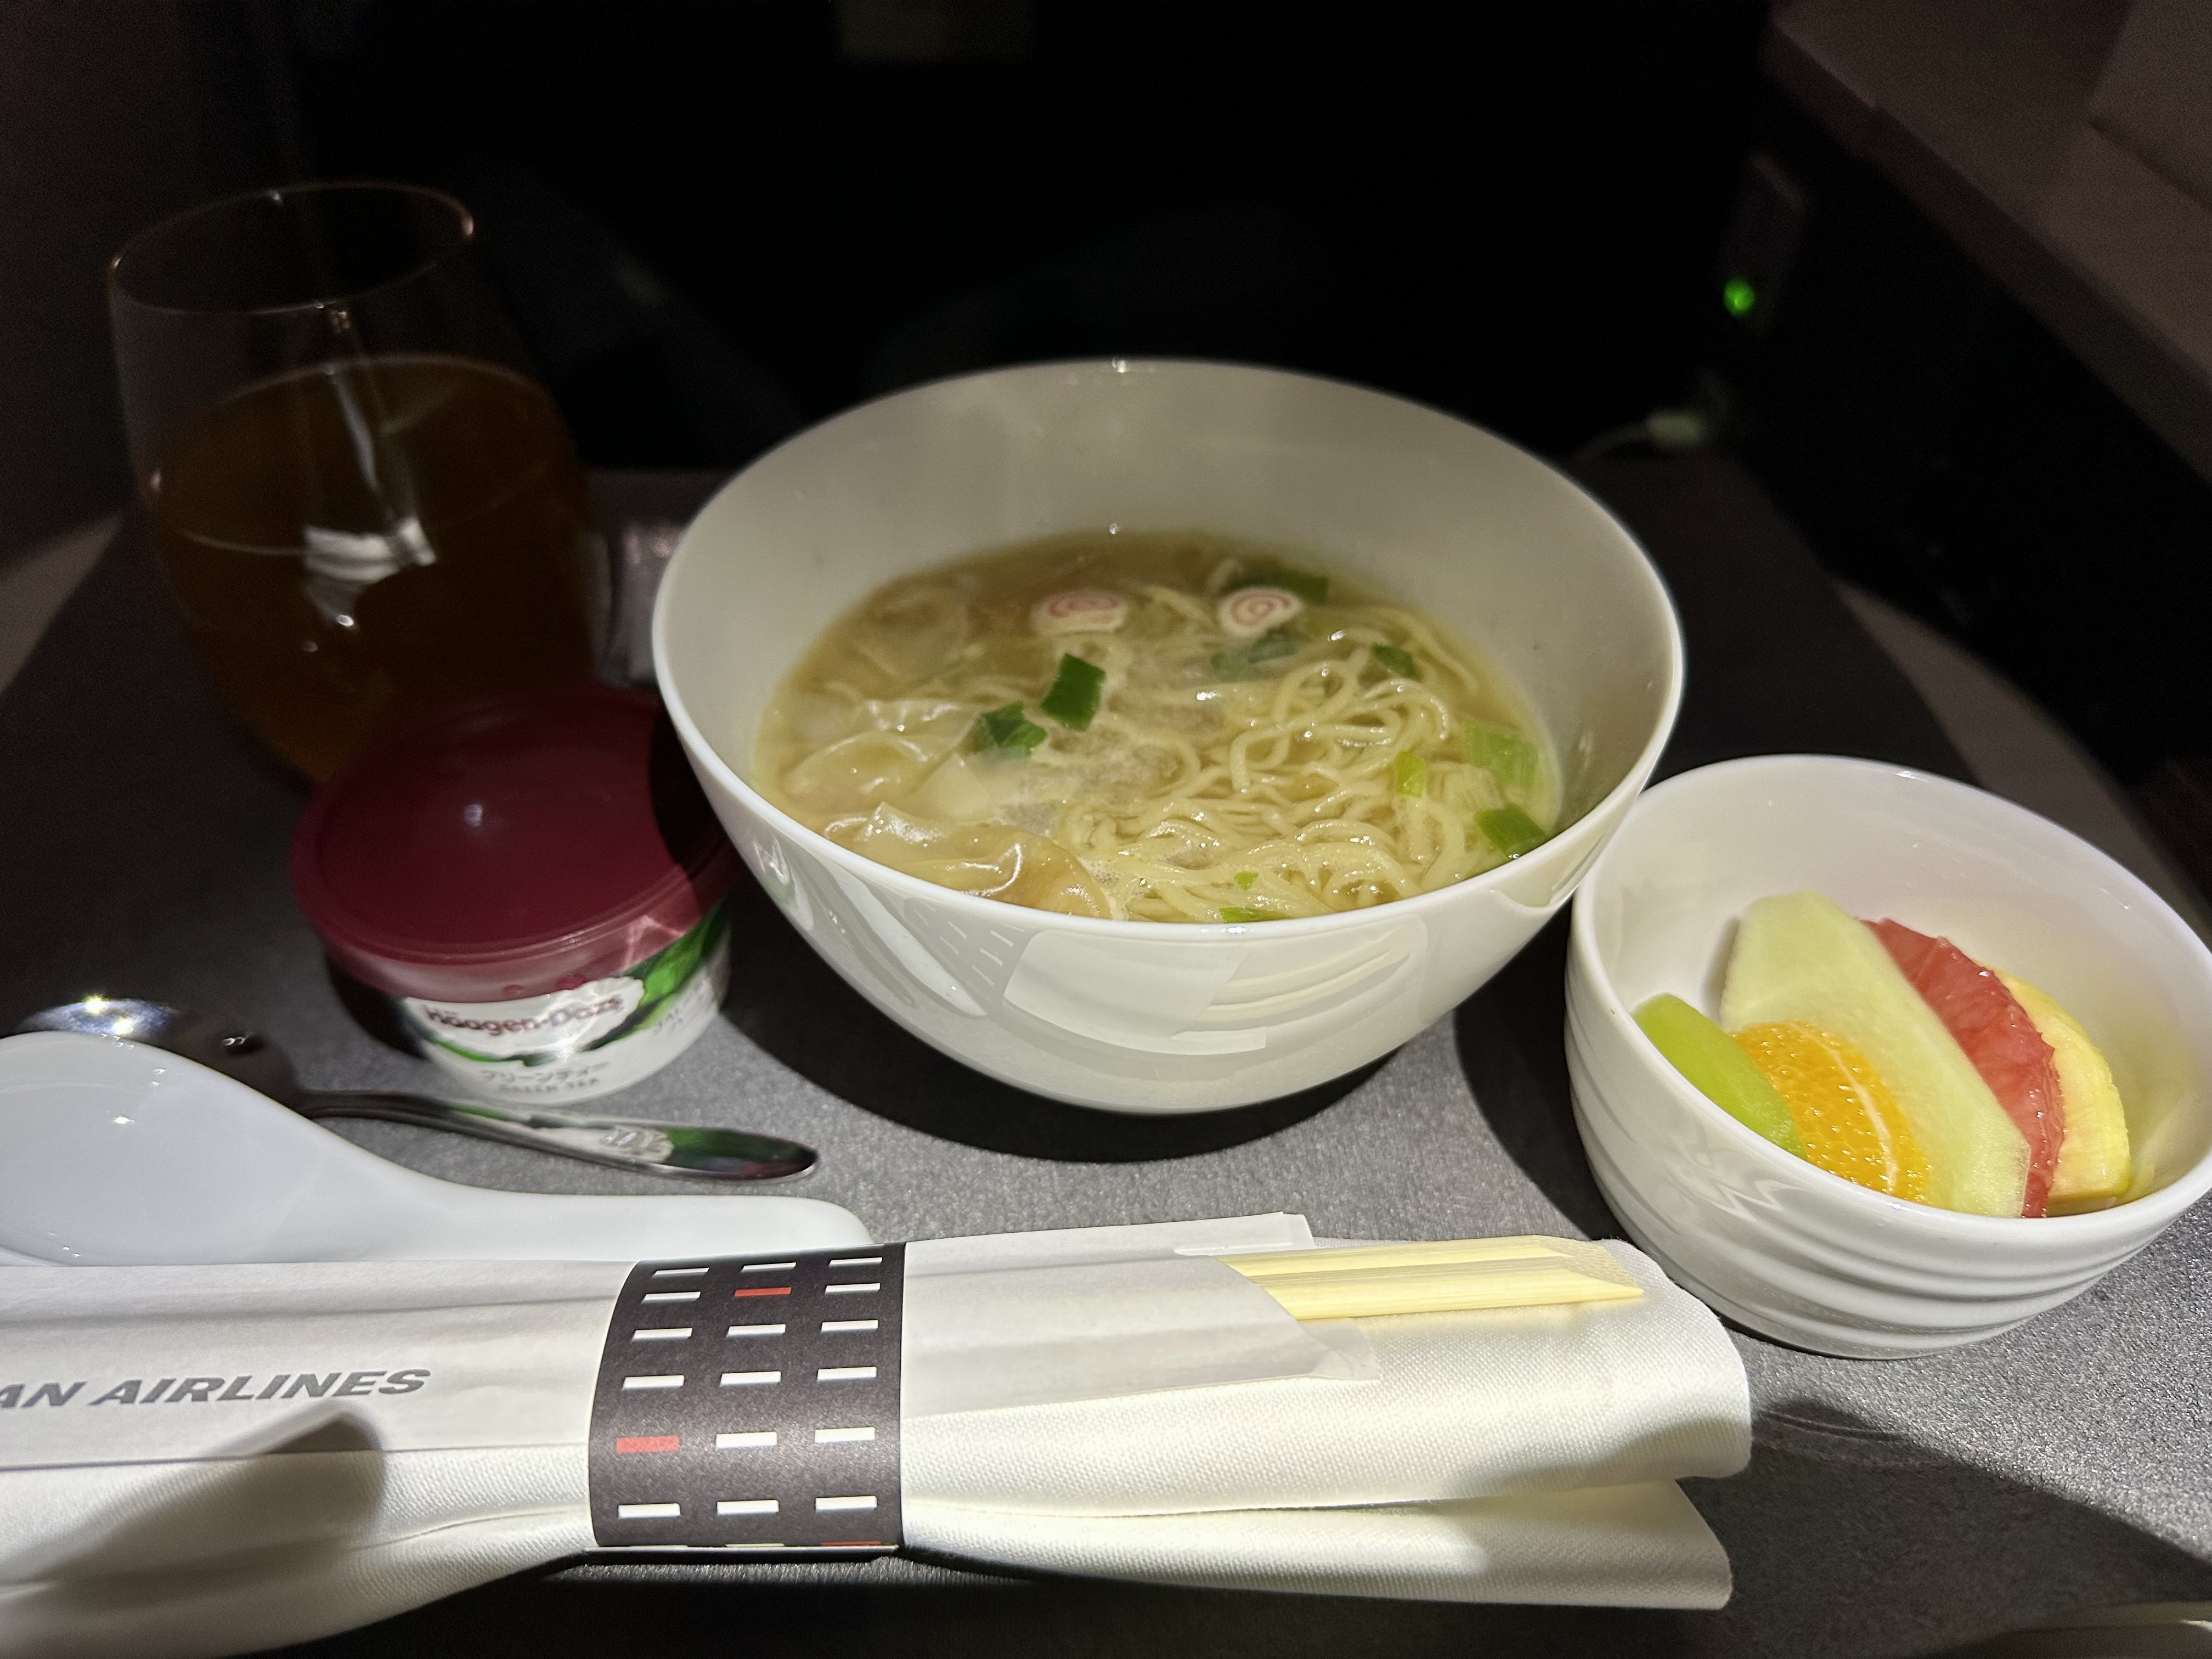 Japan Airlines Sky Suite